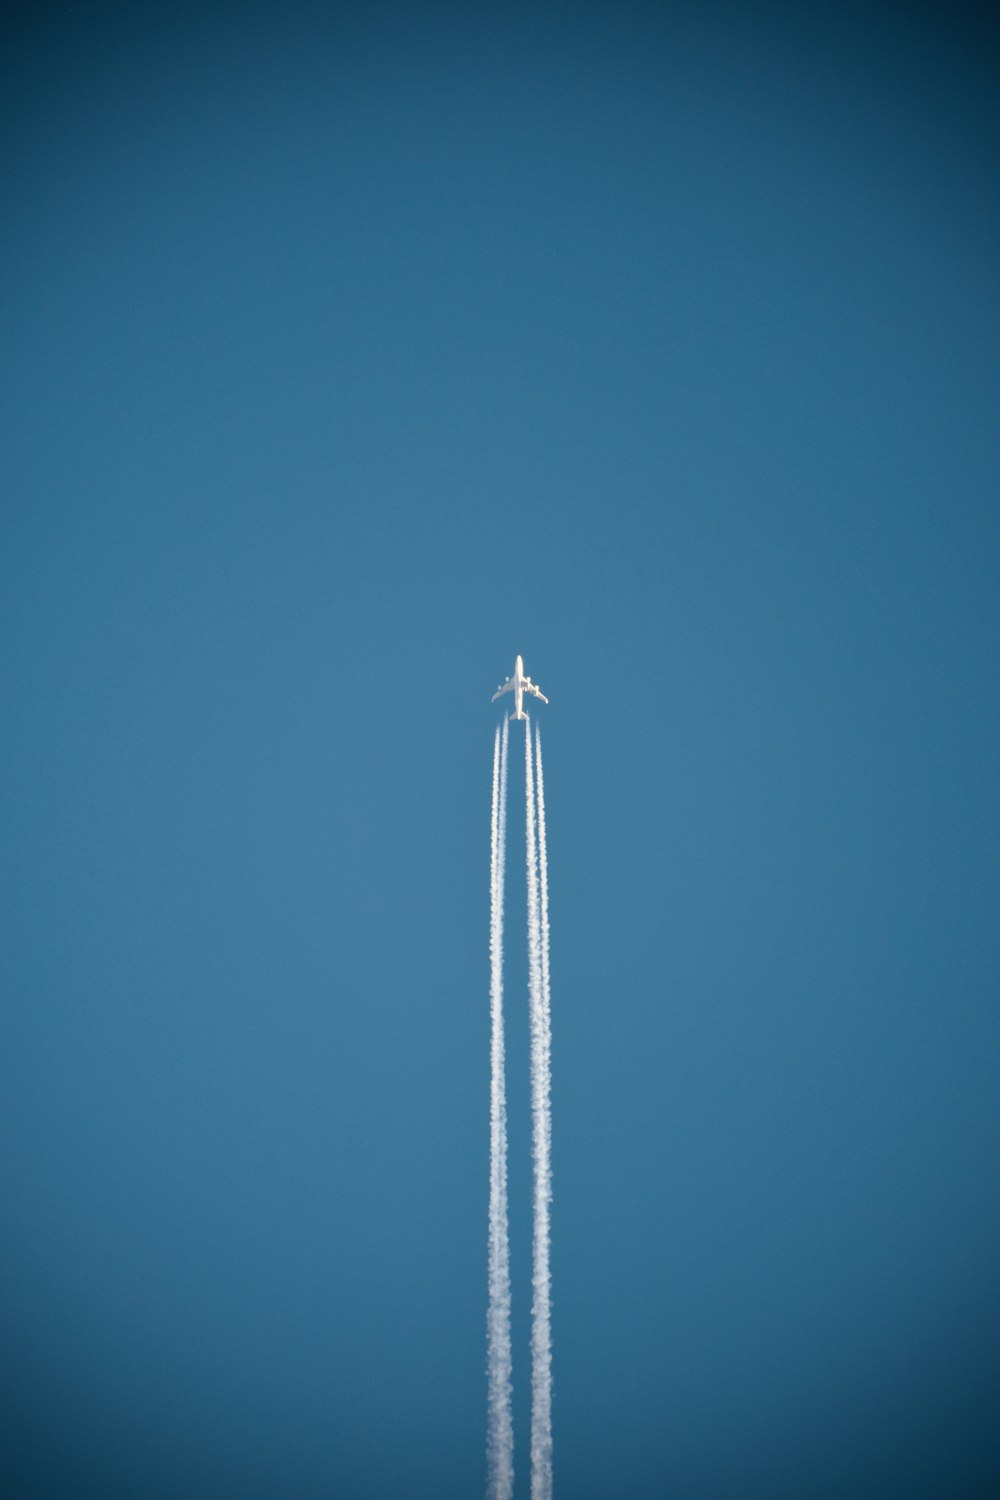 a rocket flying in the sky